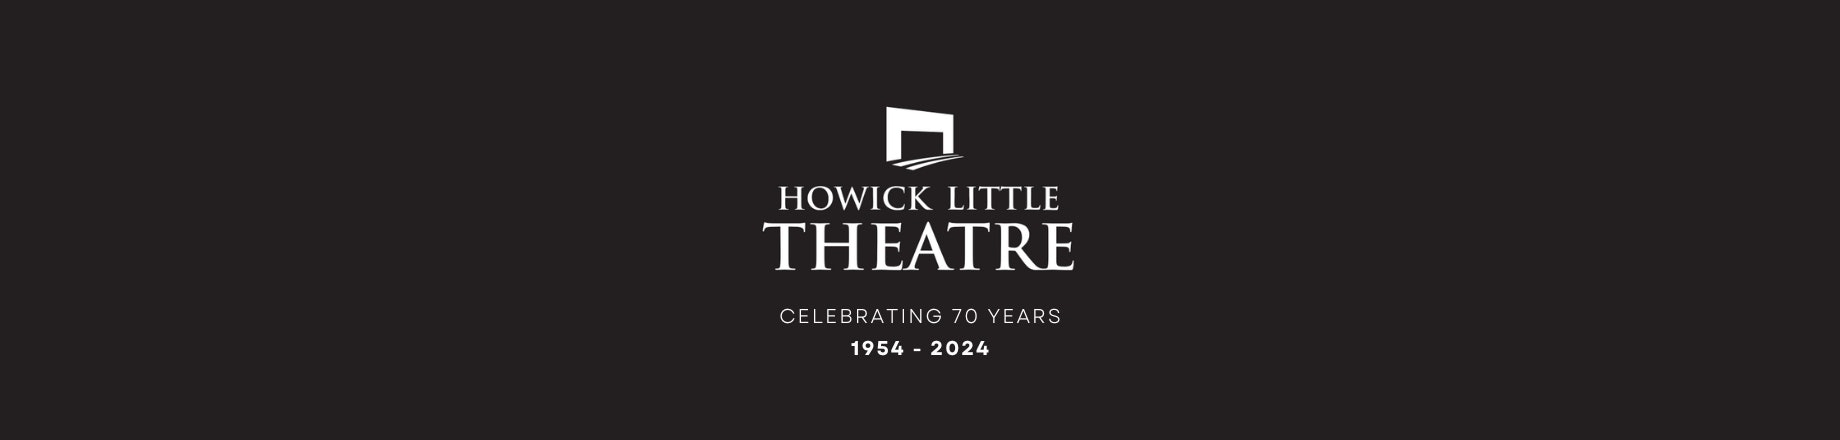 Howick Little Theatre